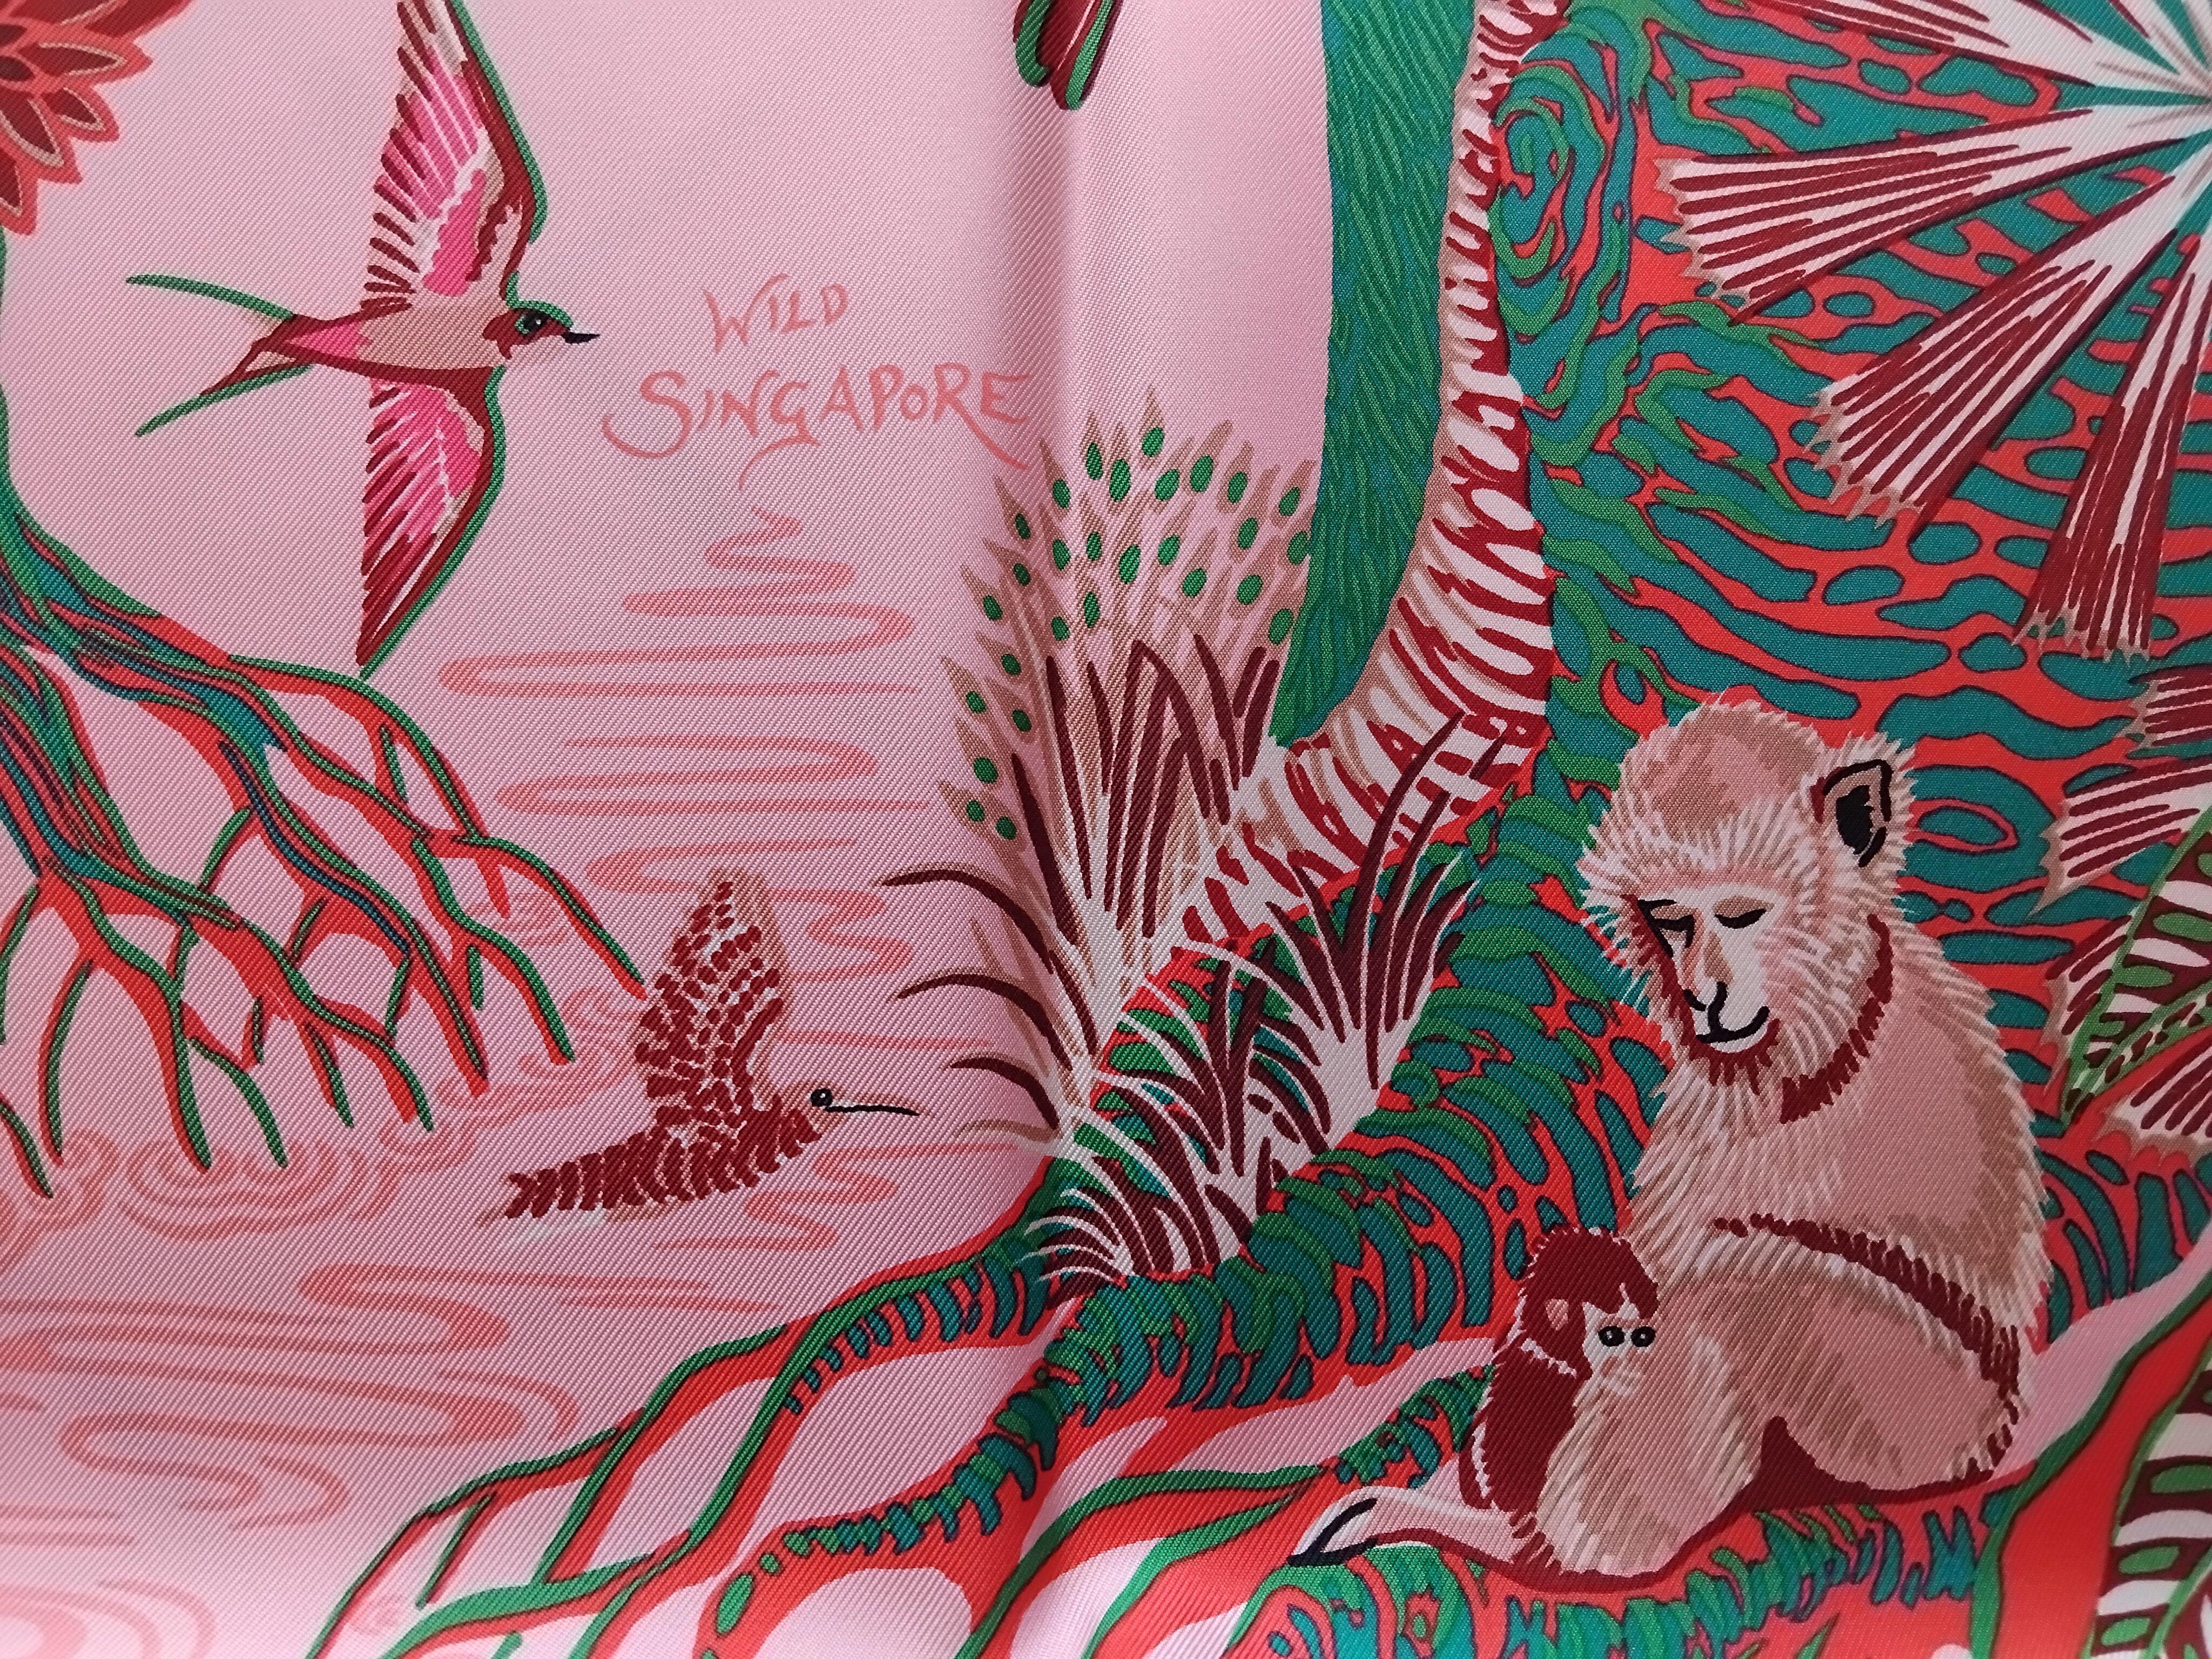 Écharpe en soie Hermès Wild Singapore Alice Shirley Pink Green 35' en vente 10